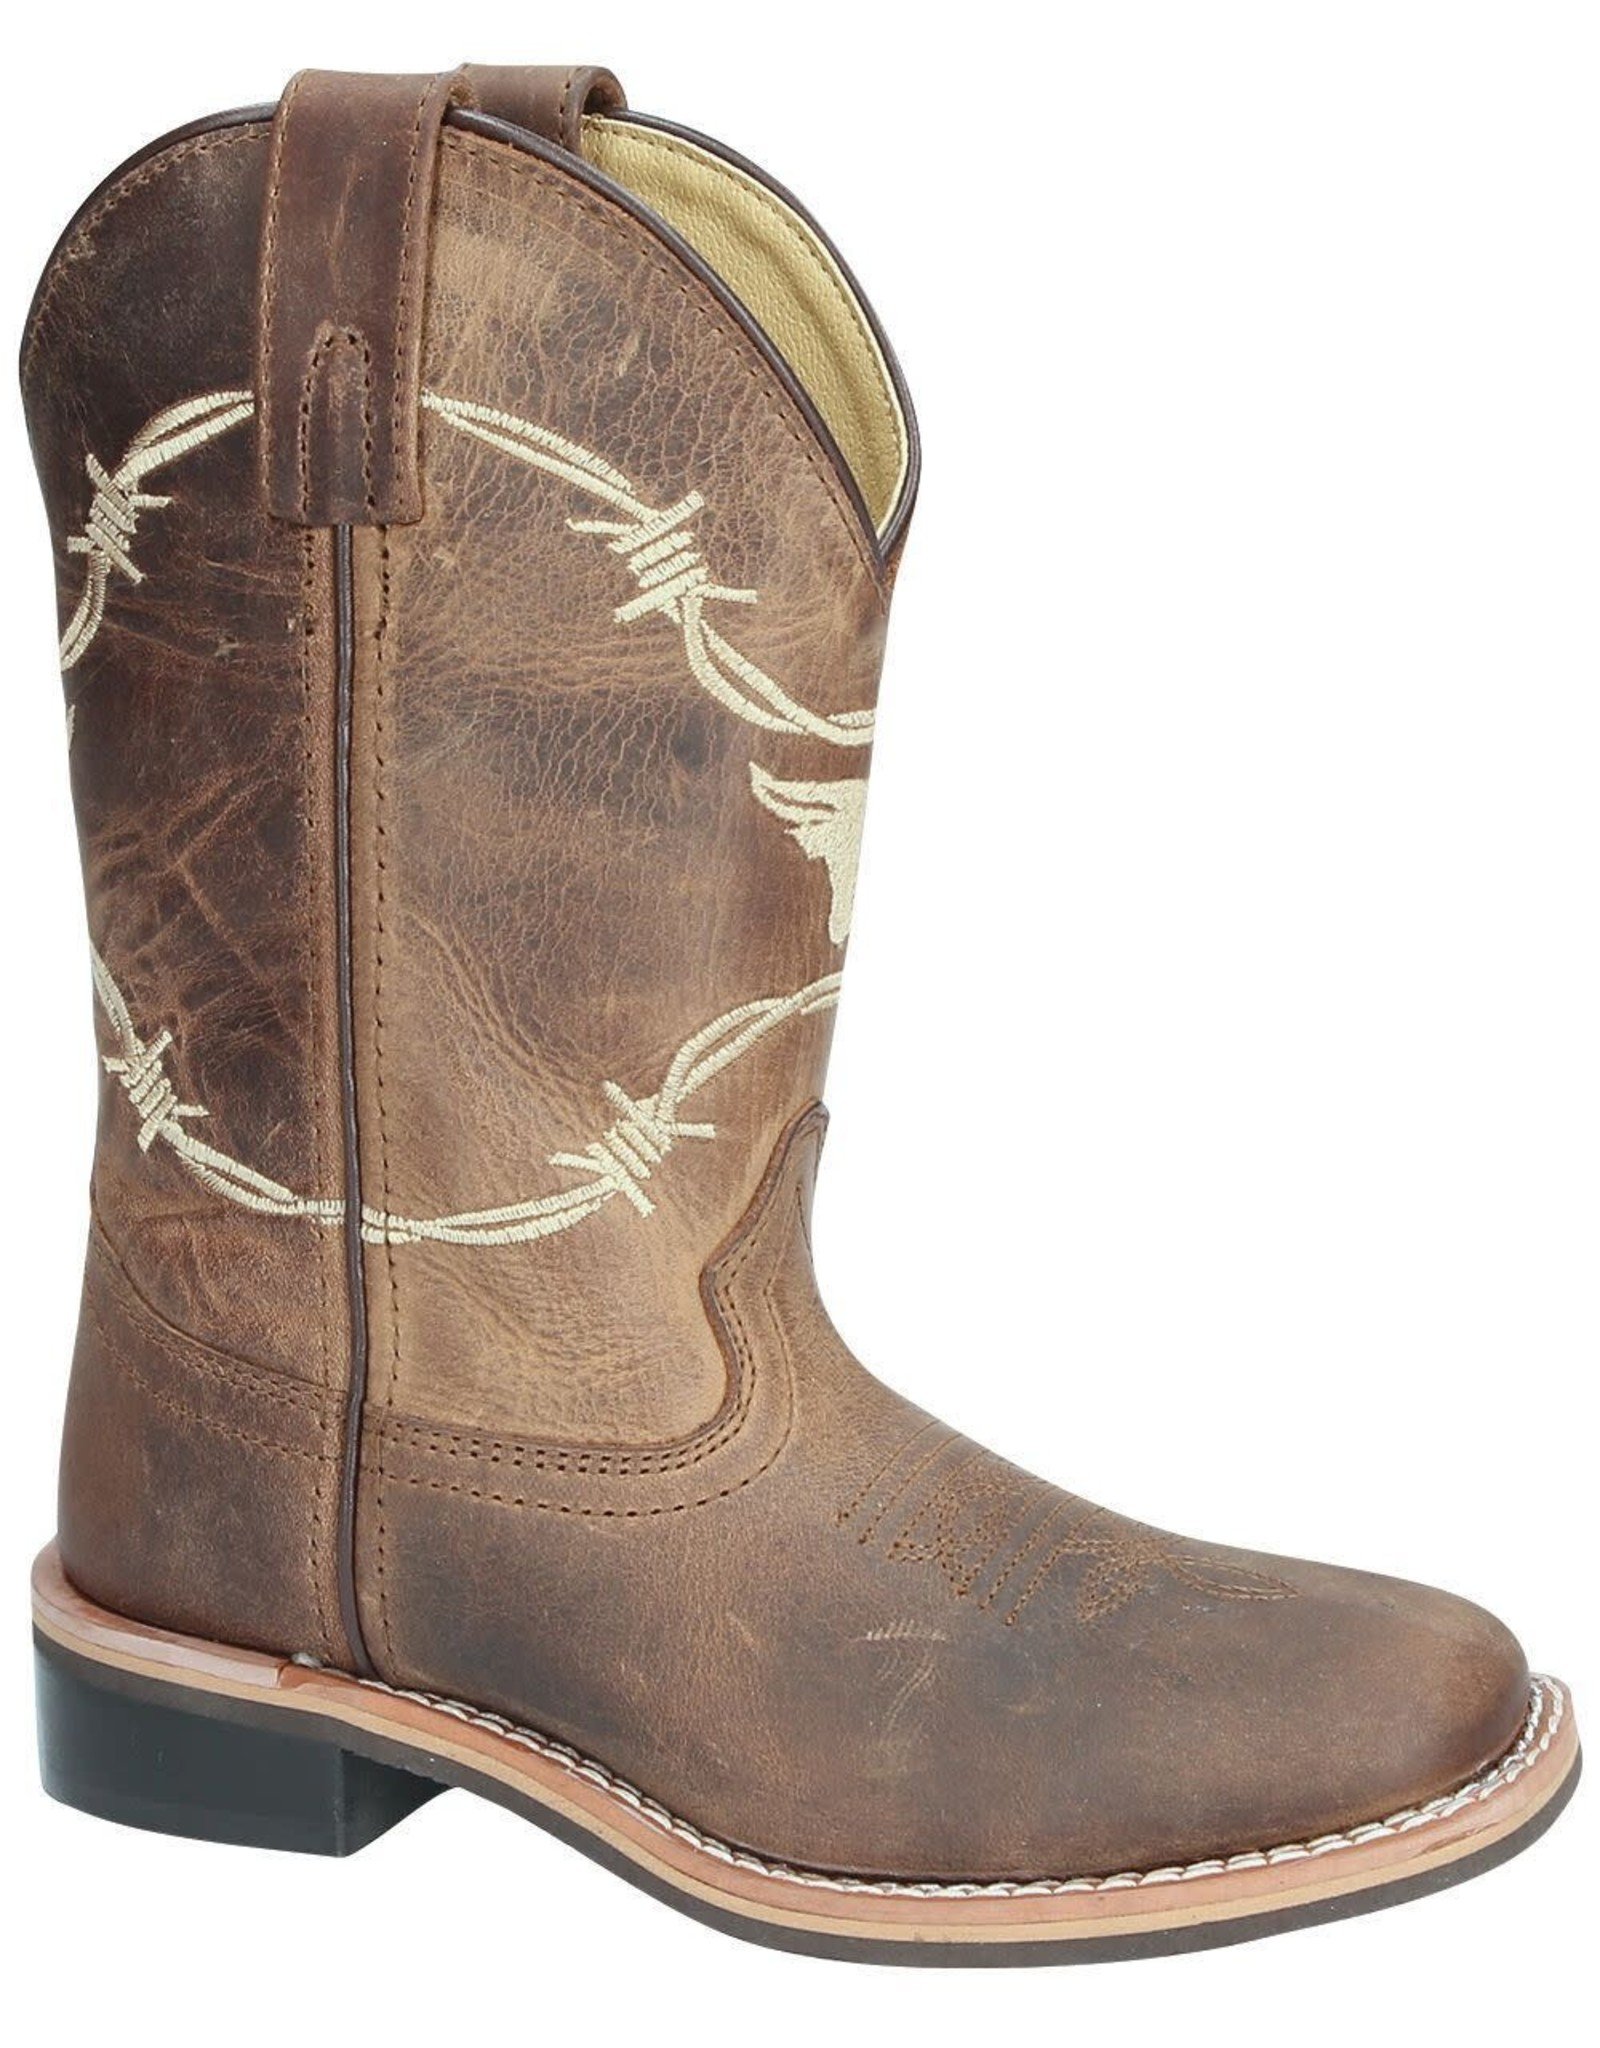 Smoky Mountain Kid's Logan Steerhead & Barbwire 3923 Western Boots